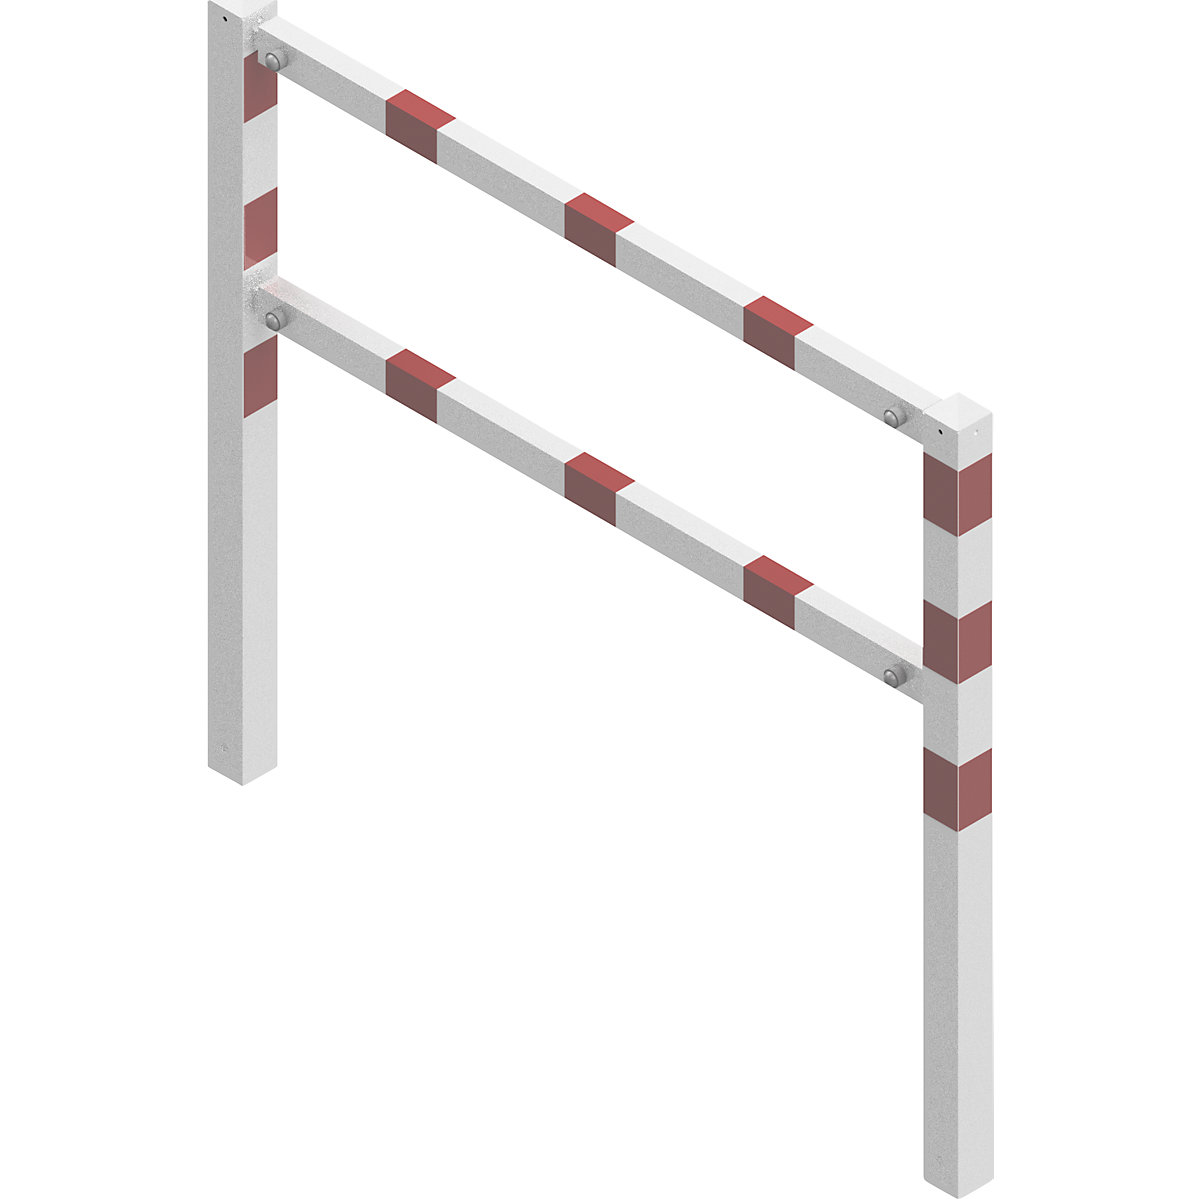 Access barrier, bolt-together